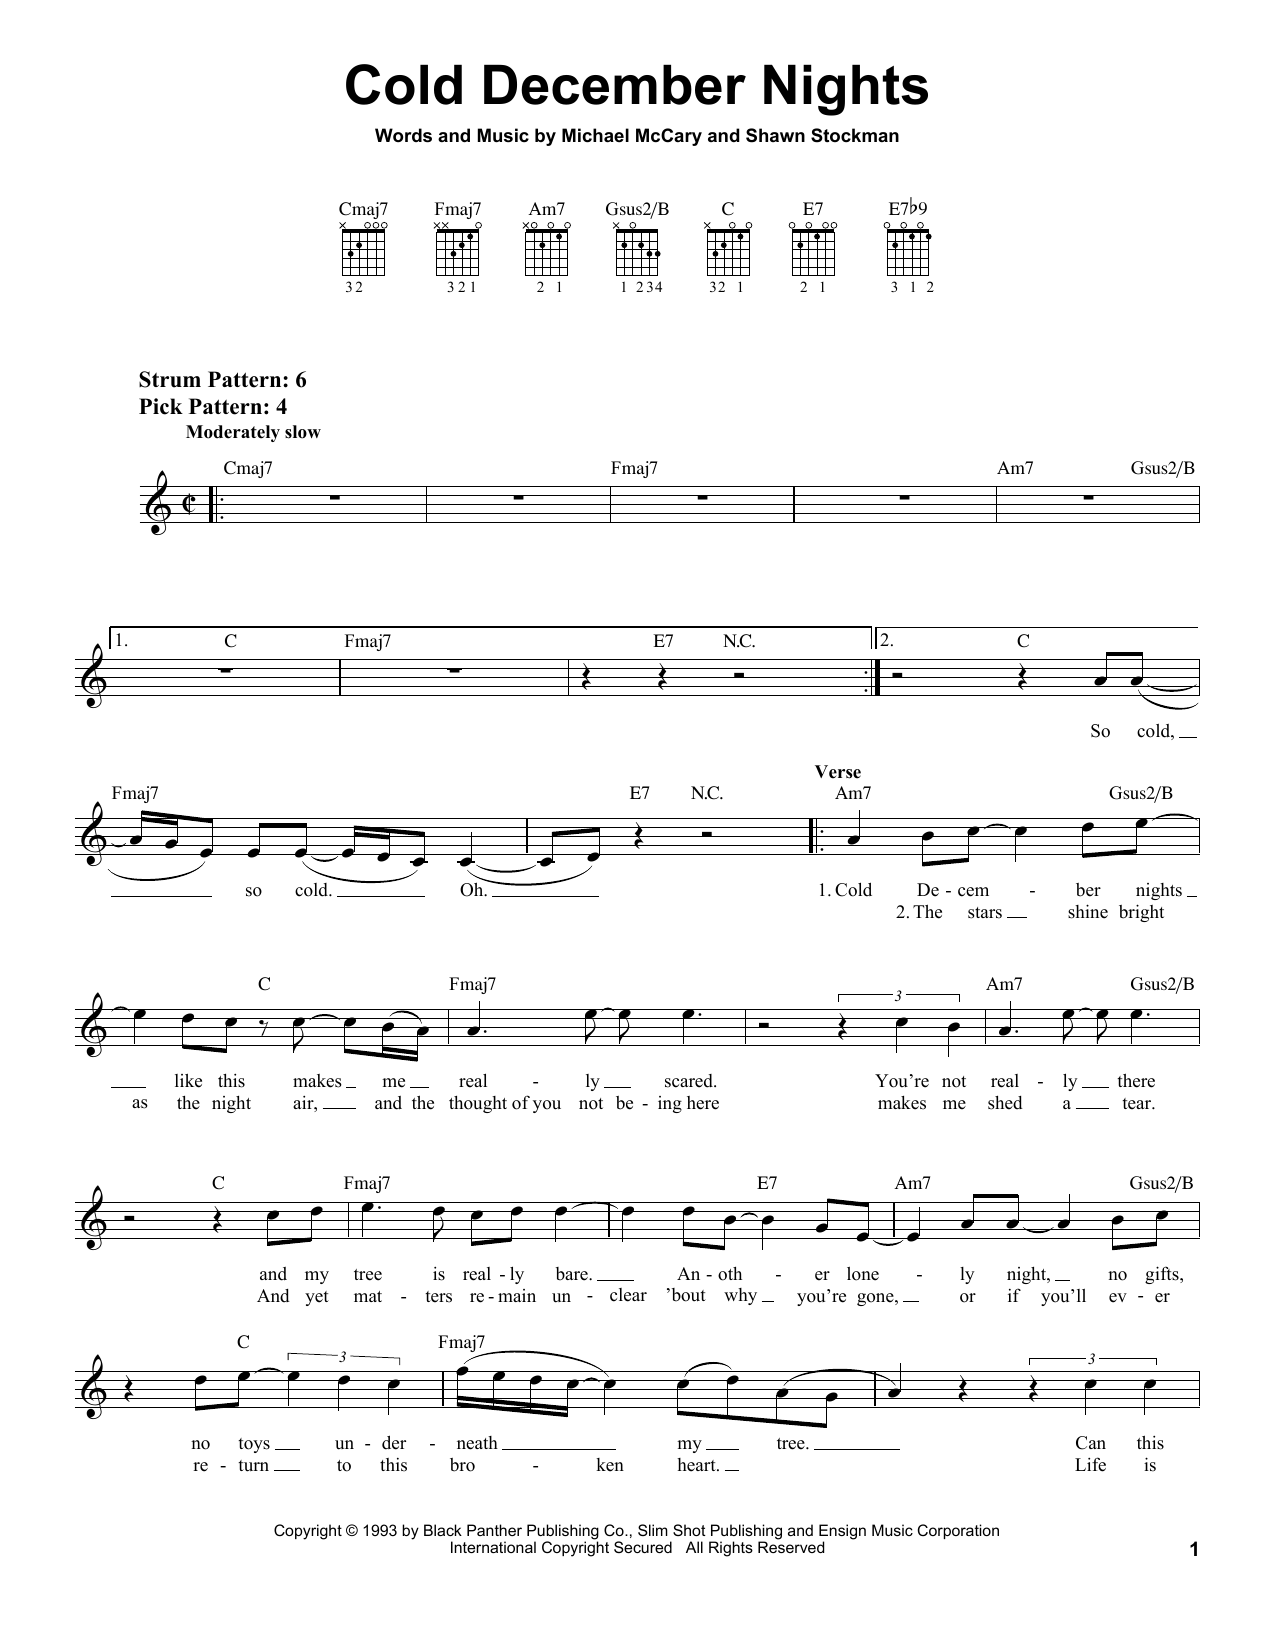 Boyz II Men Cold December Nights Sheet Music Notes & Chords for Alto Saxophone - Download or Print PDF